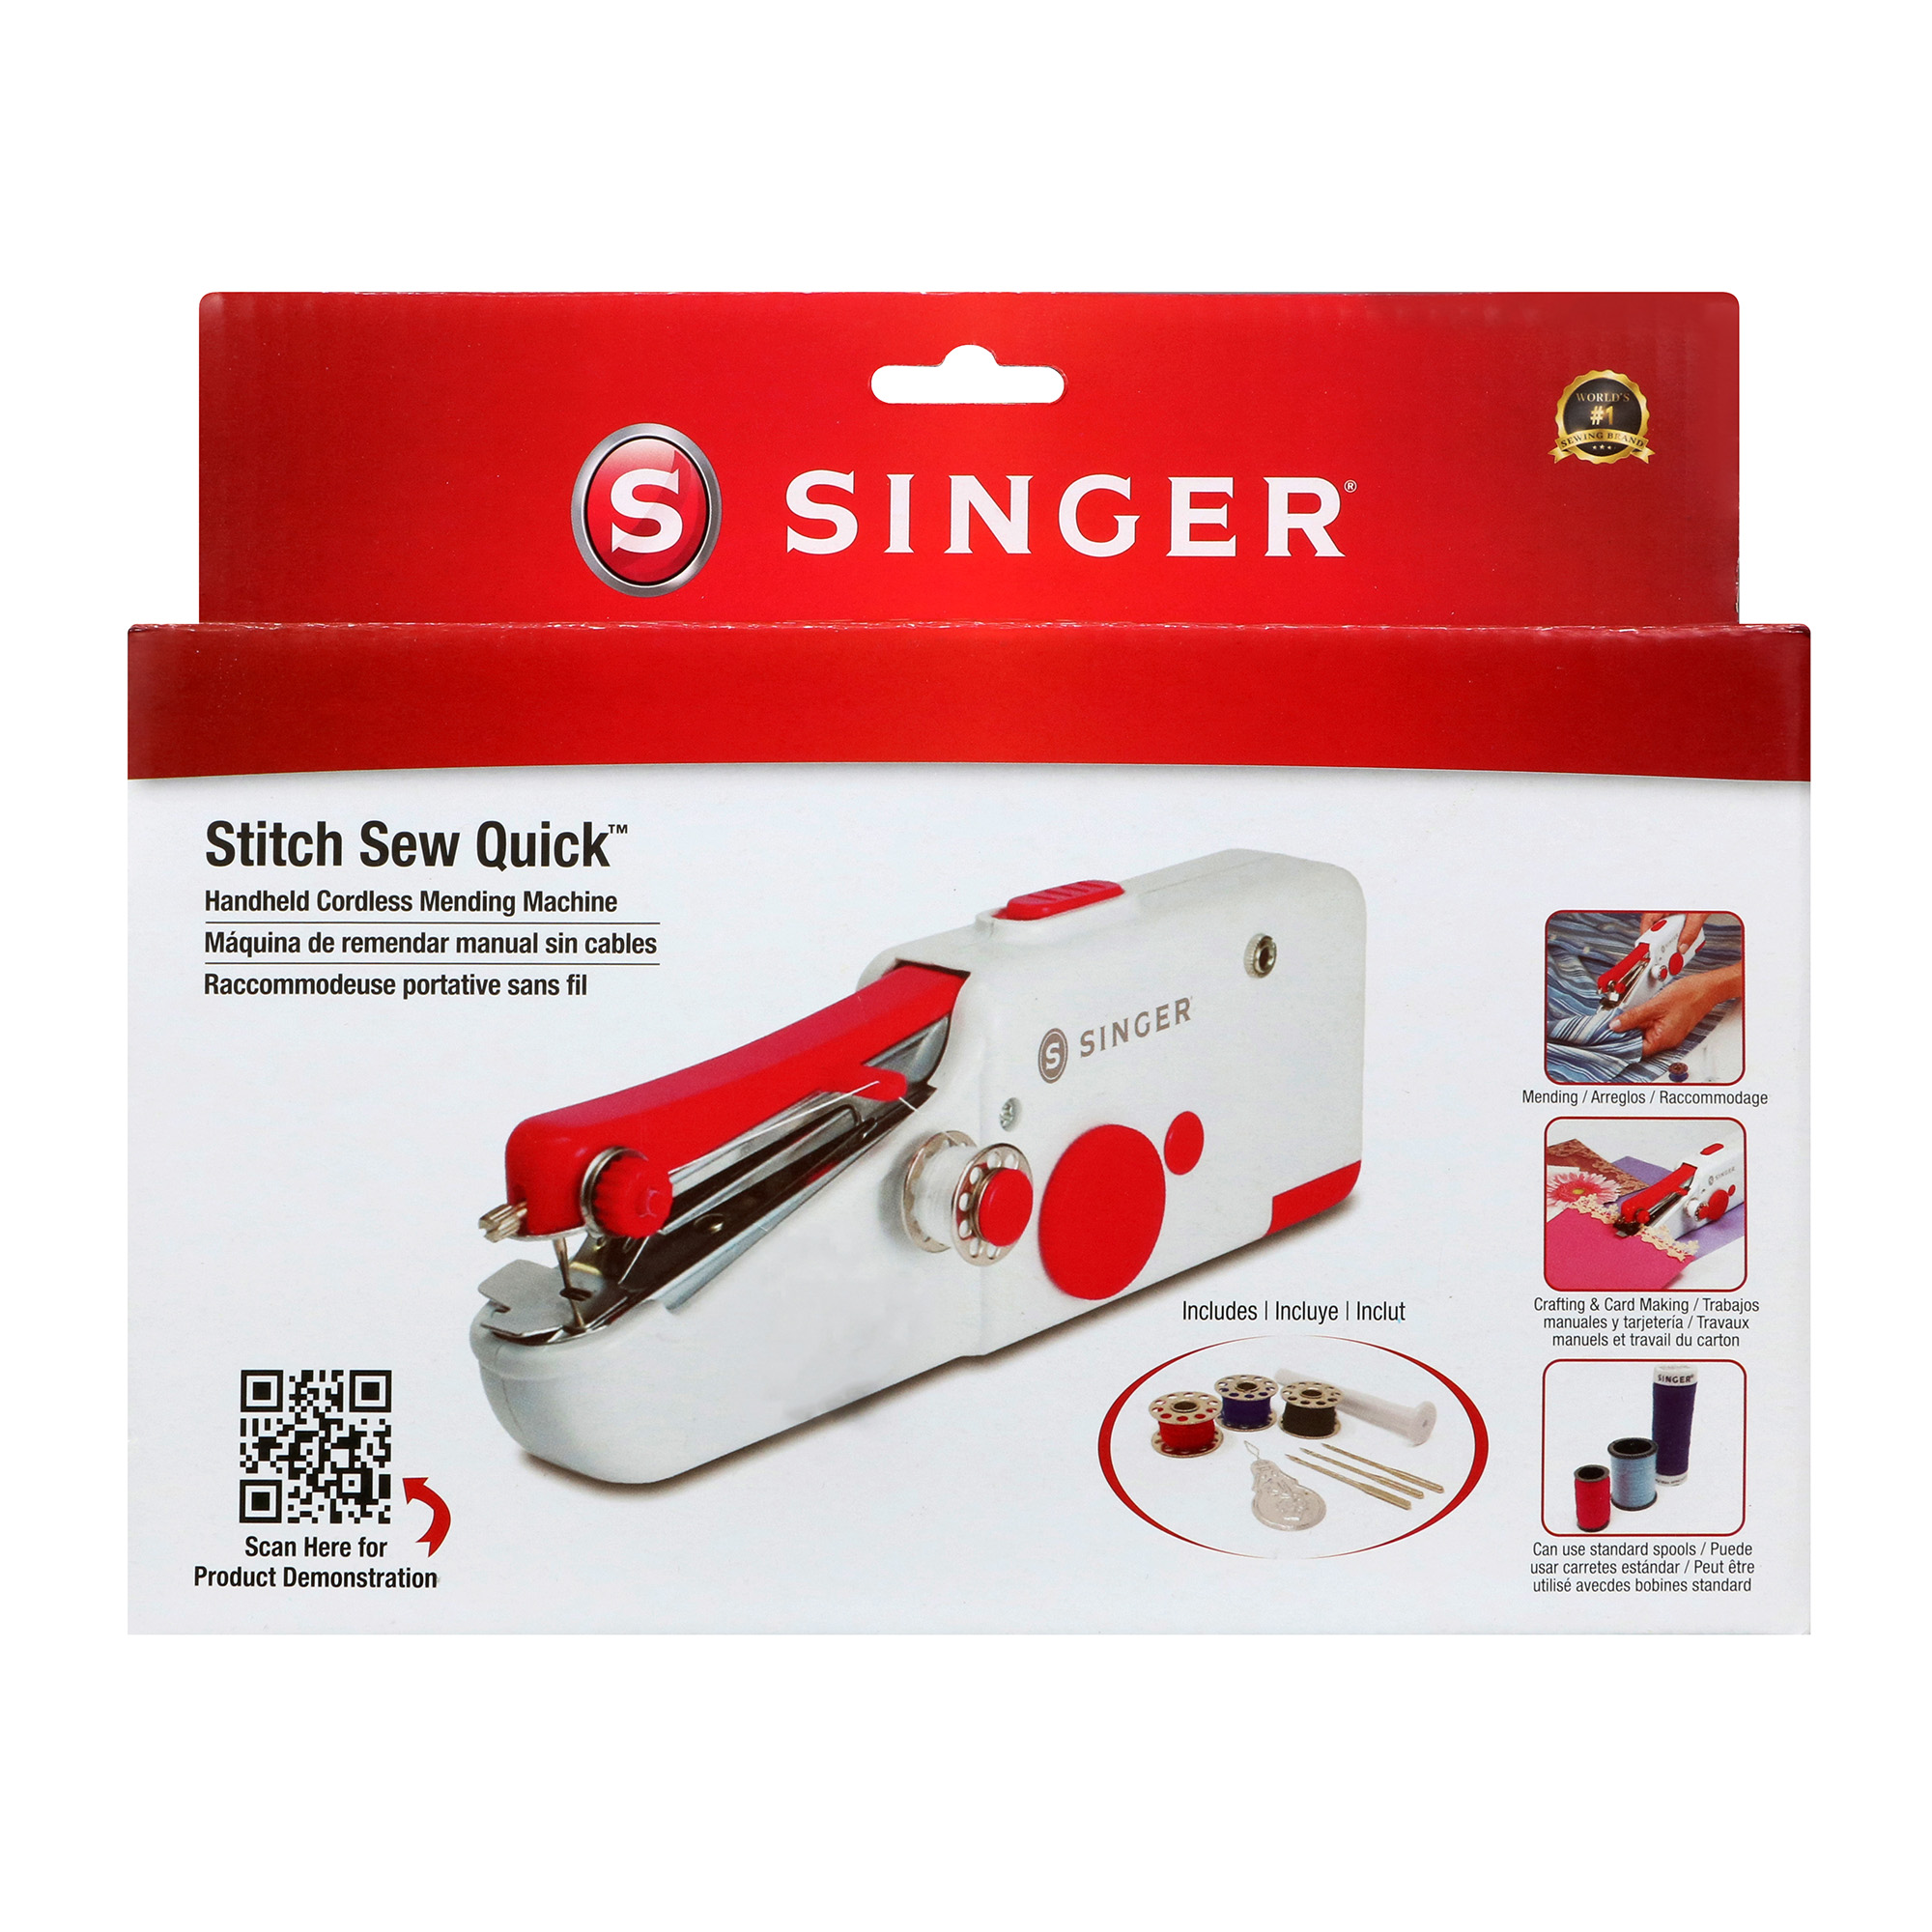 SINGER Stitch Sew Quick Handheld Mending Machine - image 1 of 6